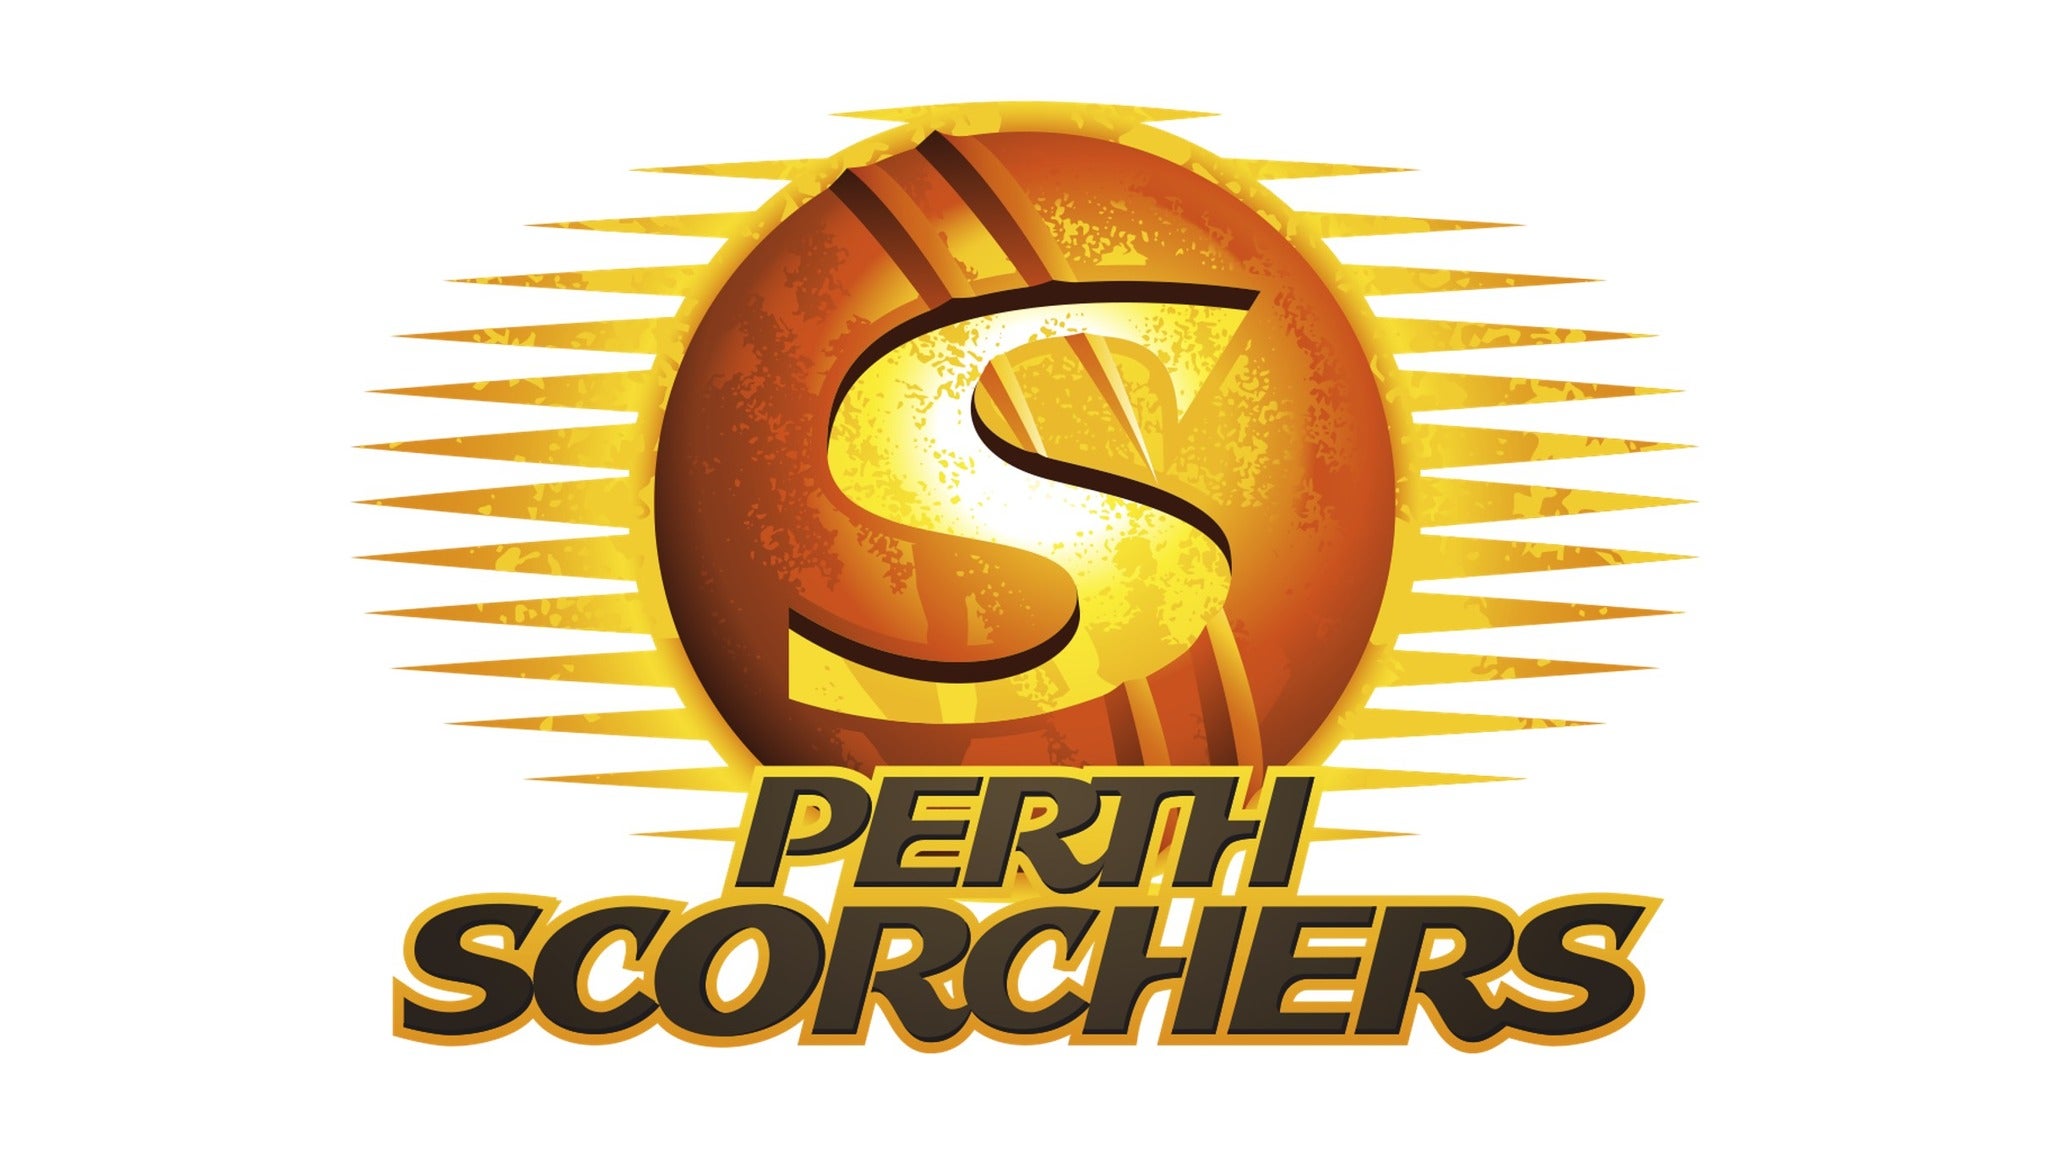 Perth Scorchers season tickets